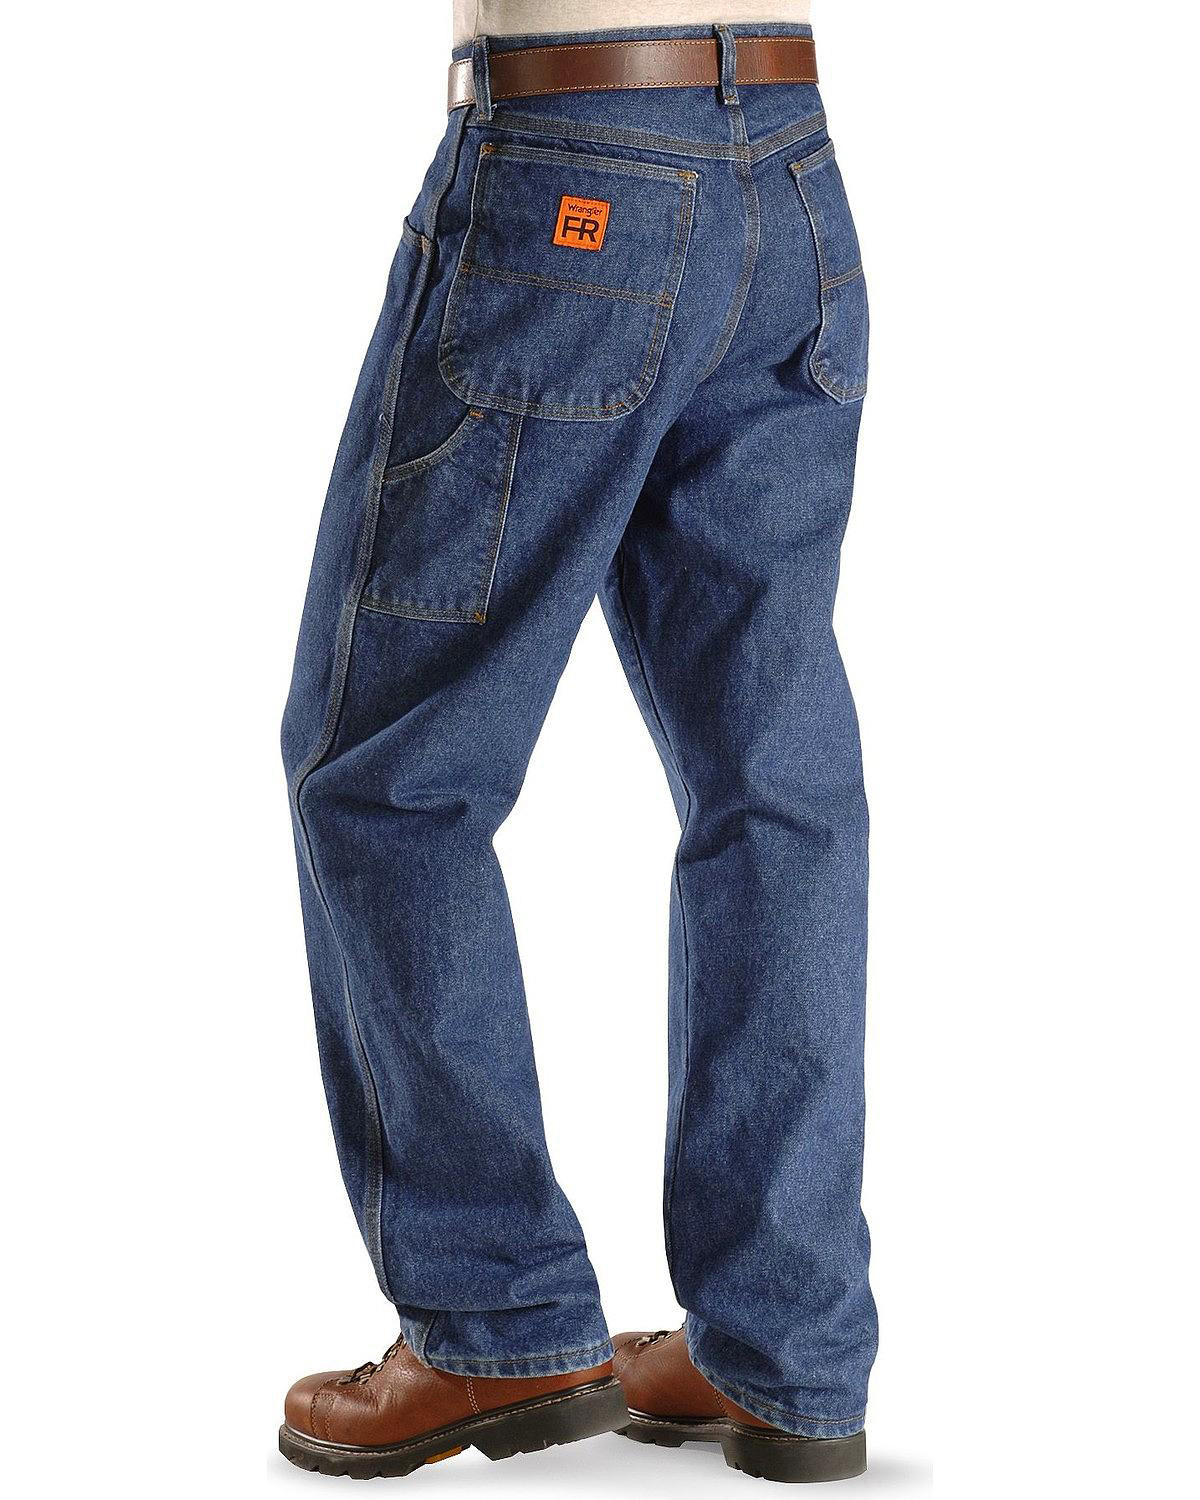 Riggs Workwear Men's FR Carpenter Jeans